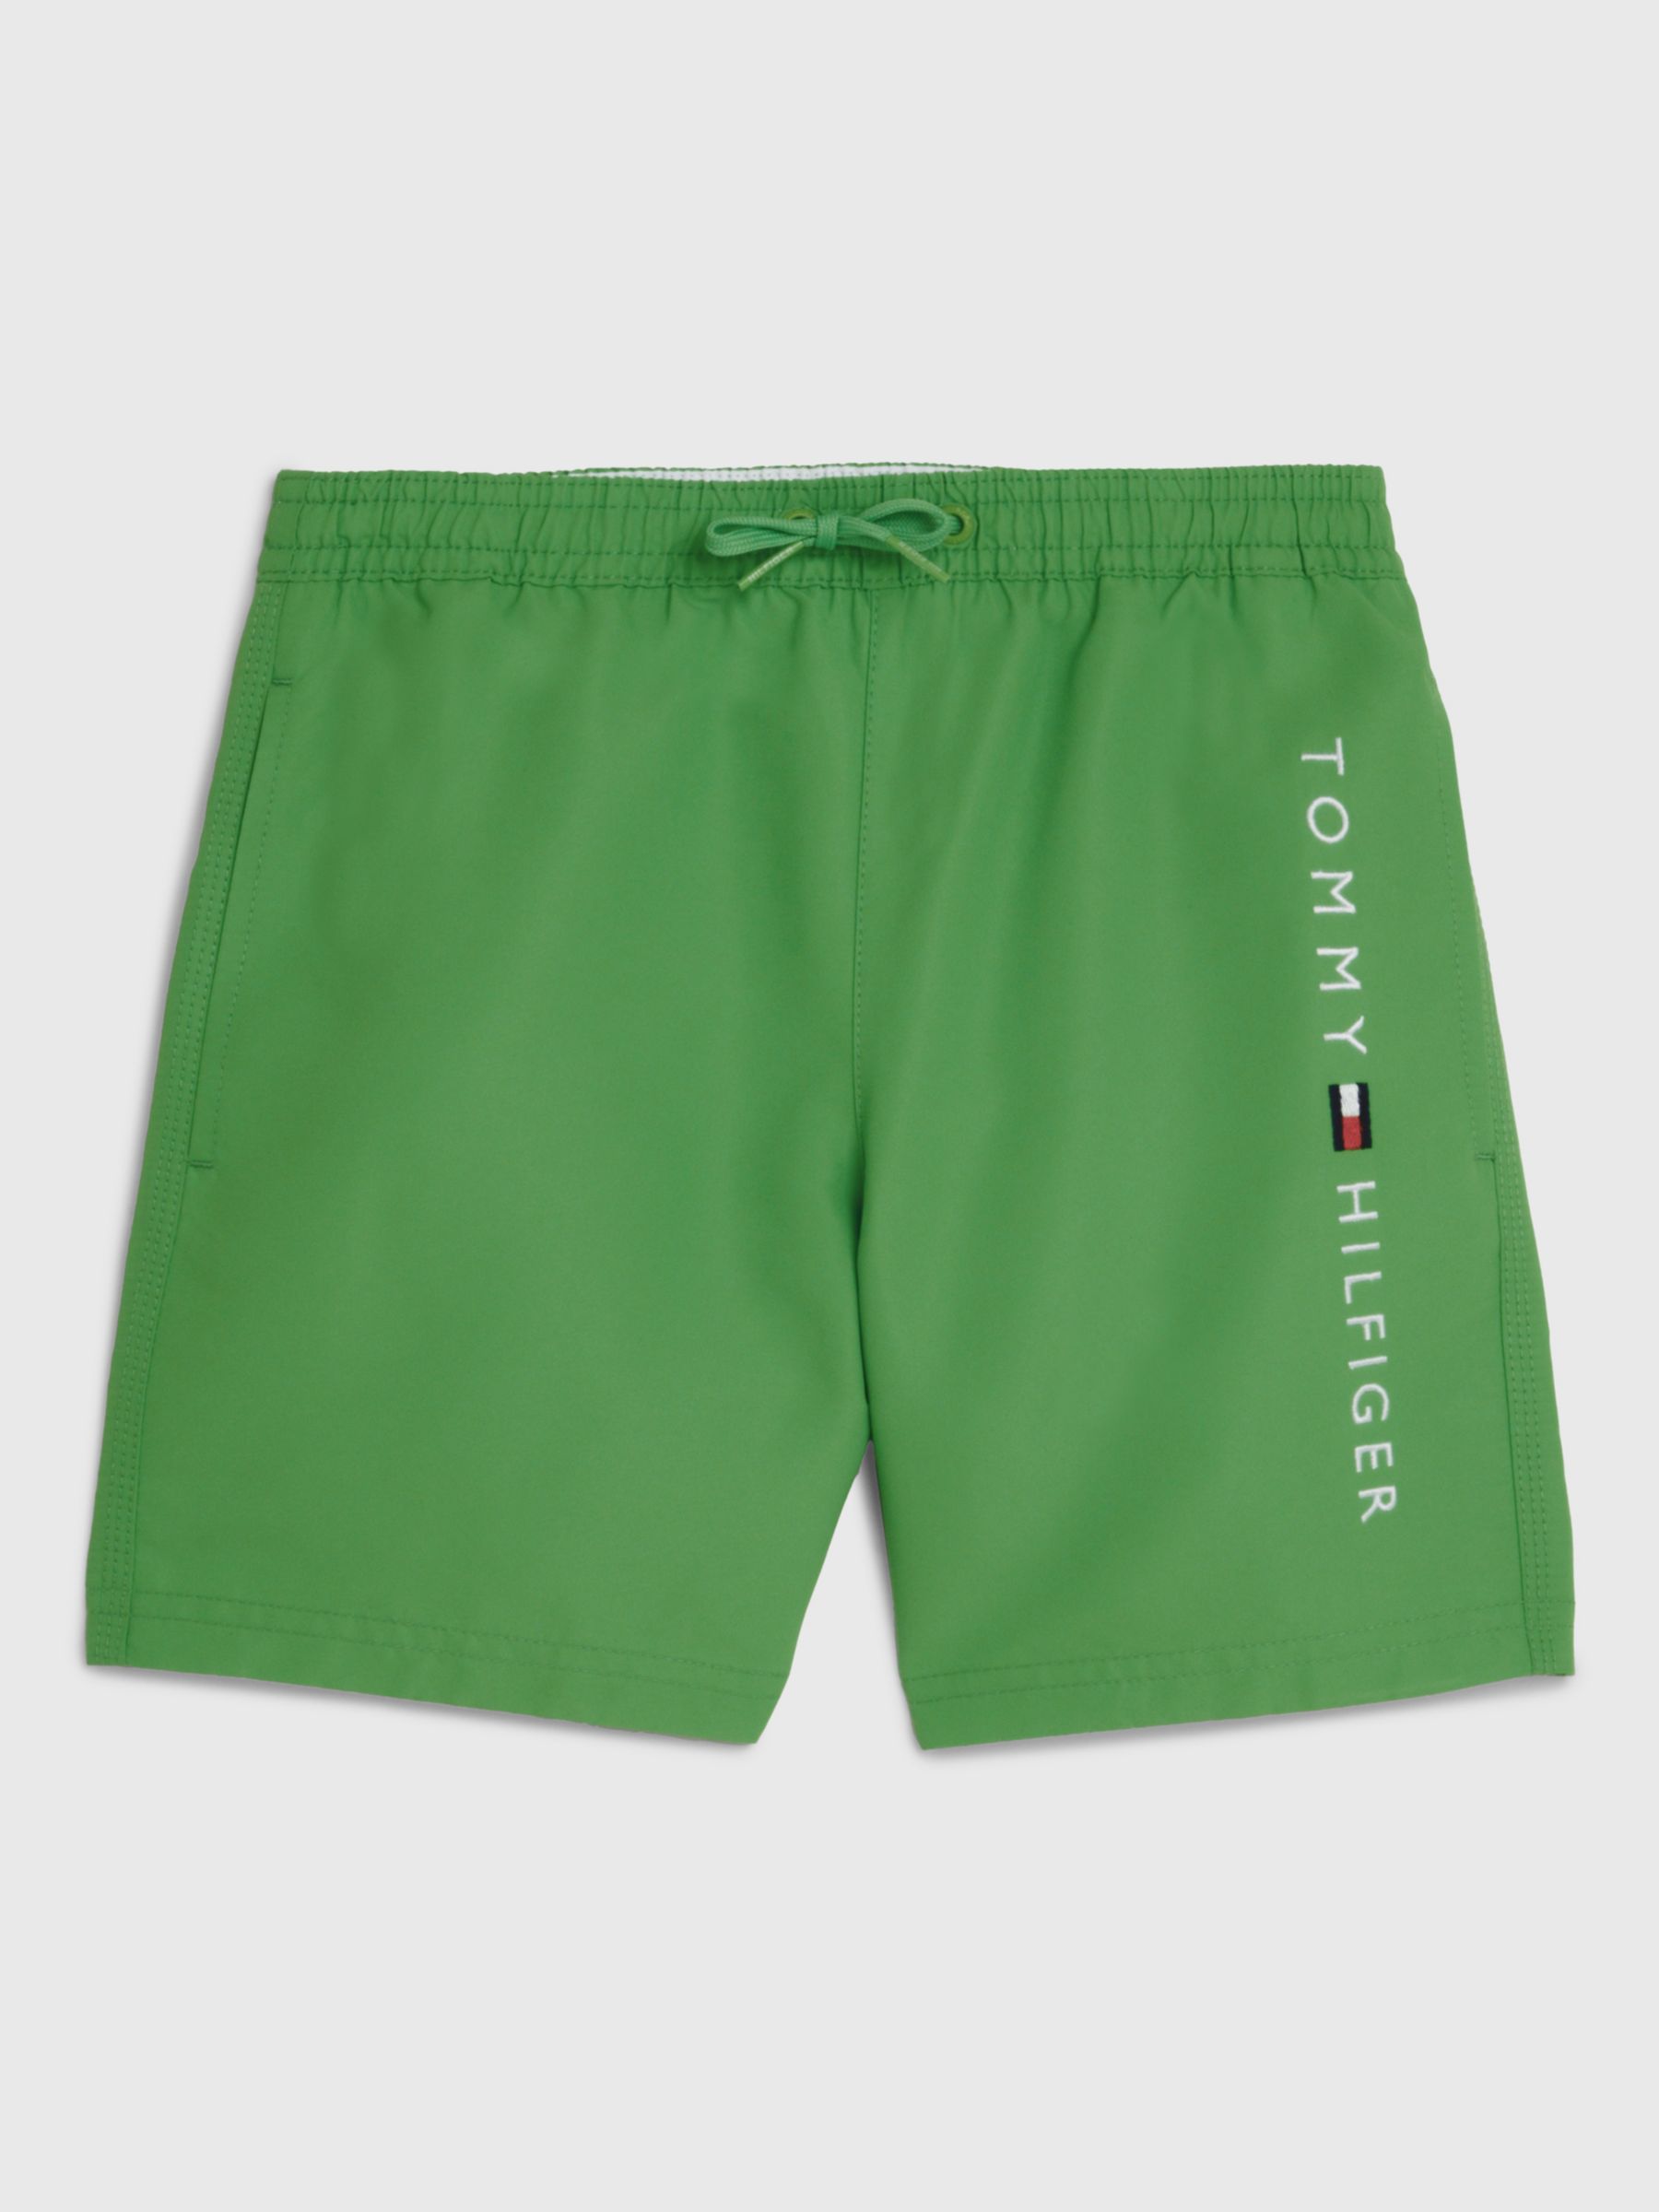 Tommy Hilfiger Kids' Logo Swim Shorts, Spring Lime, 10-12 years